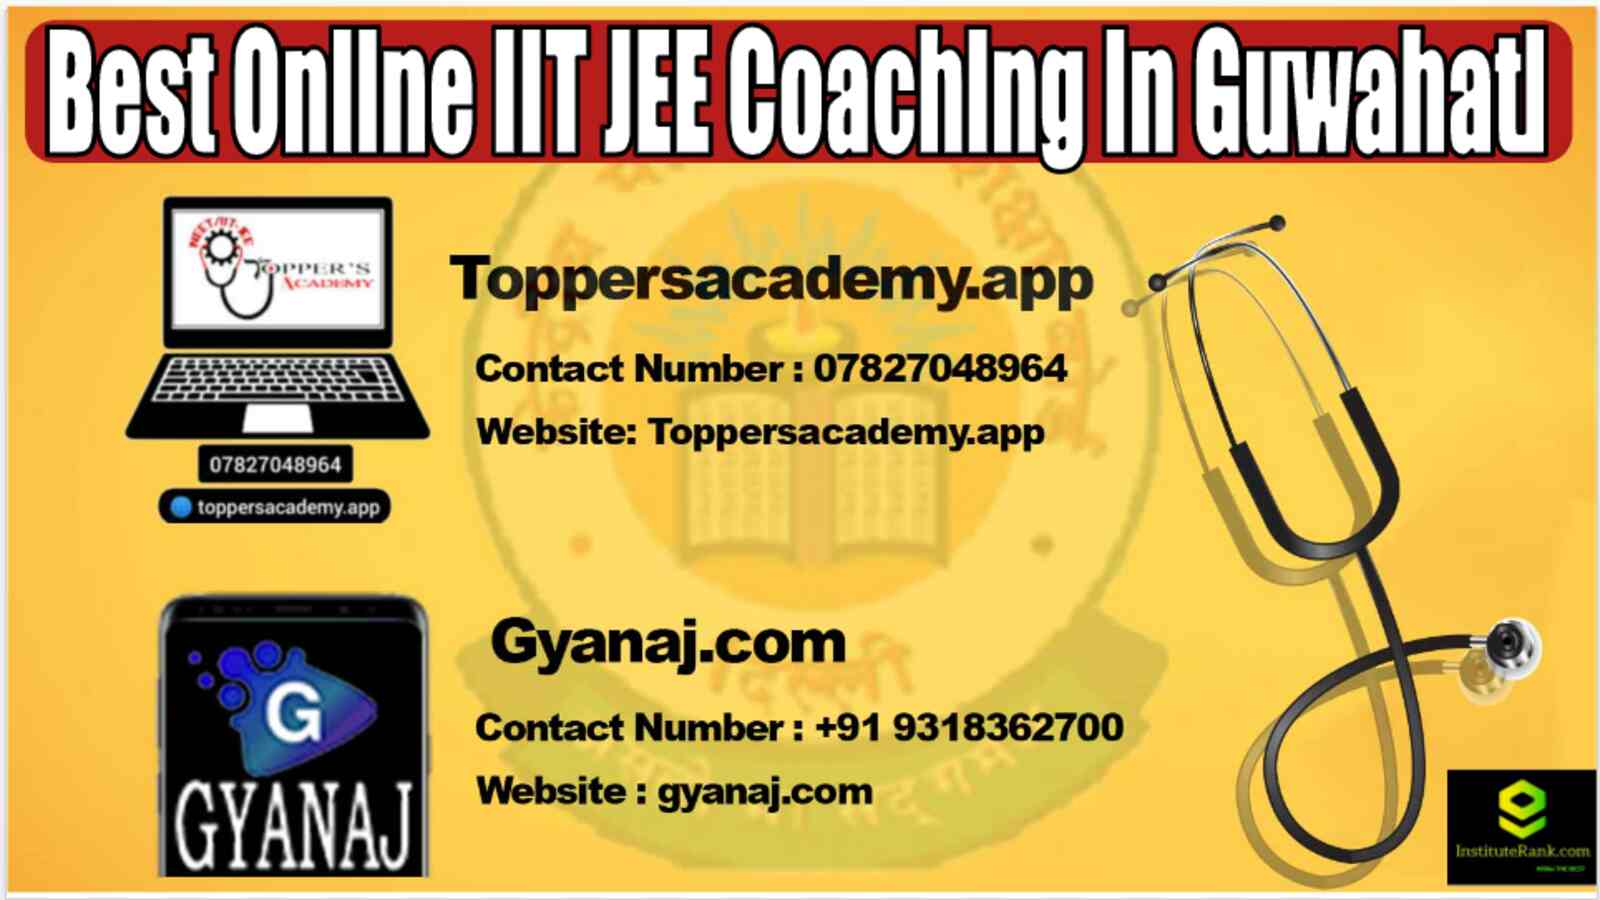 Best Online IIT JEE Coaching in Guwahati 2022